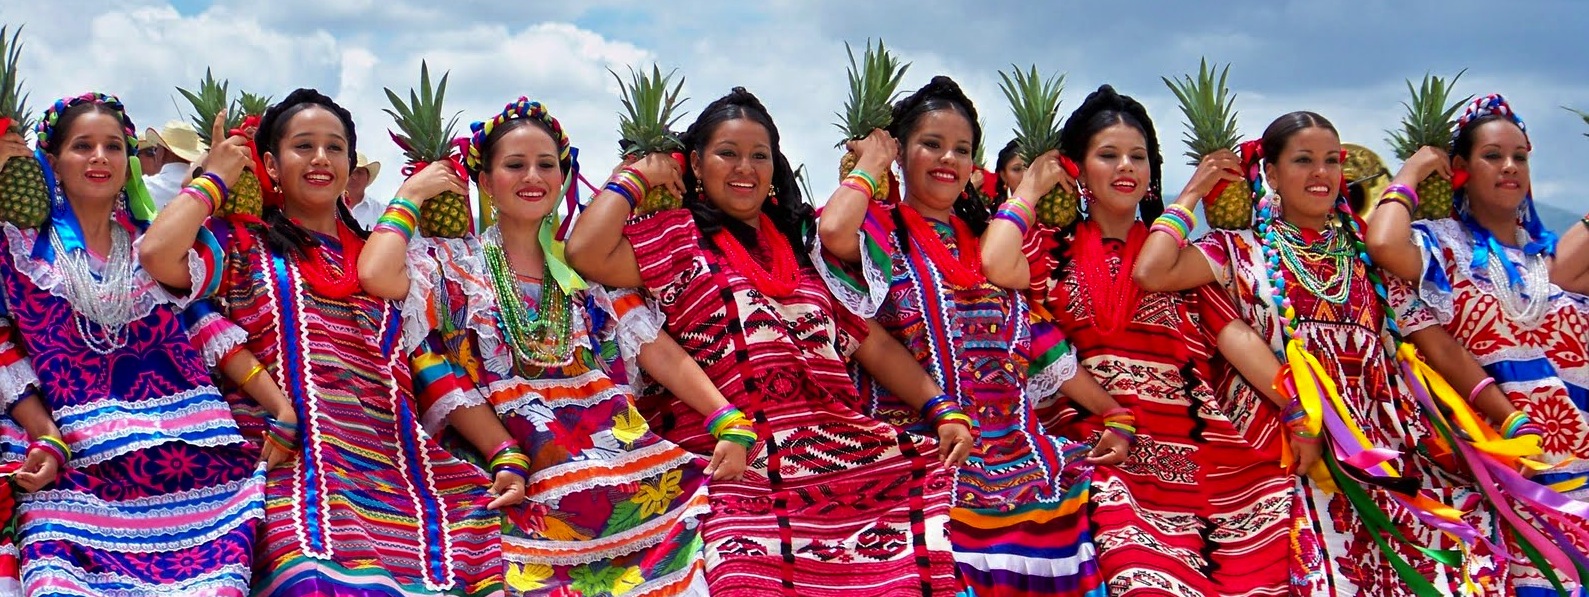 Danza Flor de Piña, el baile que enalteció a Tuxtepec dentro del